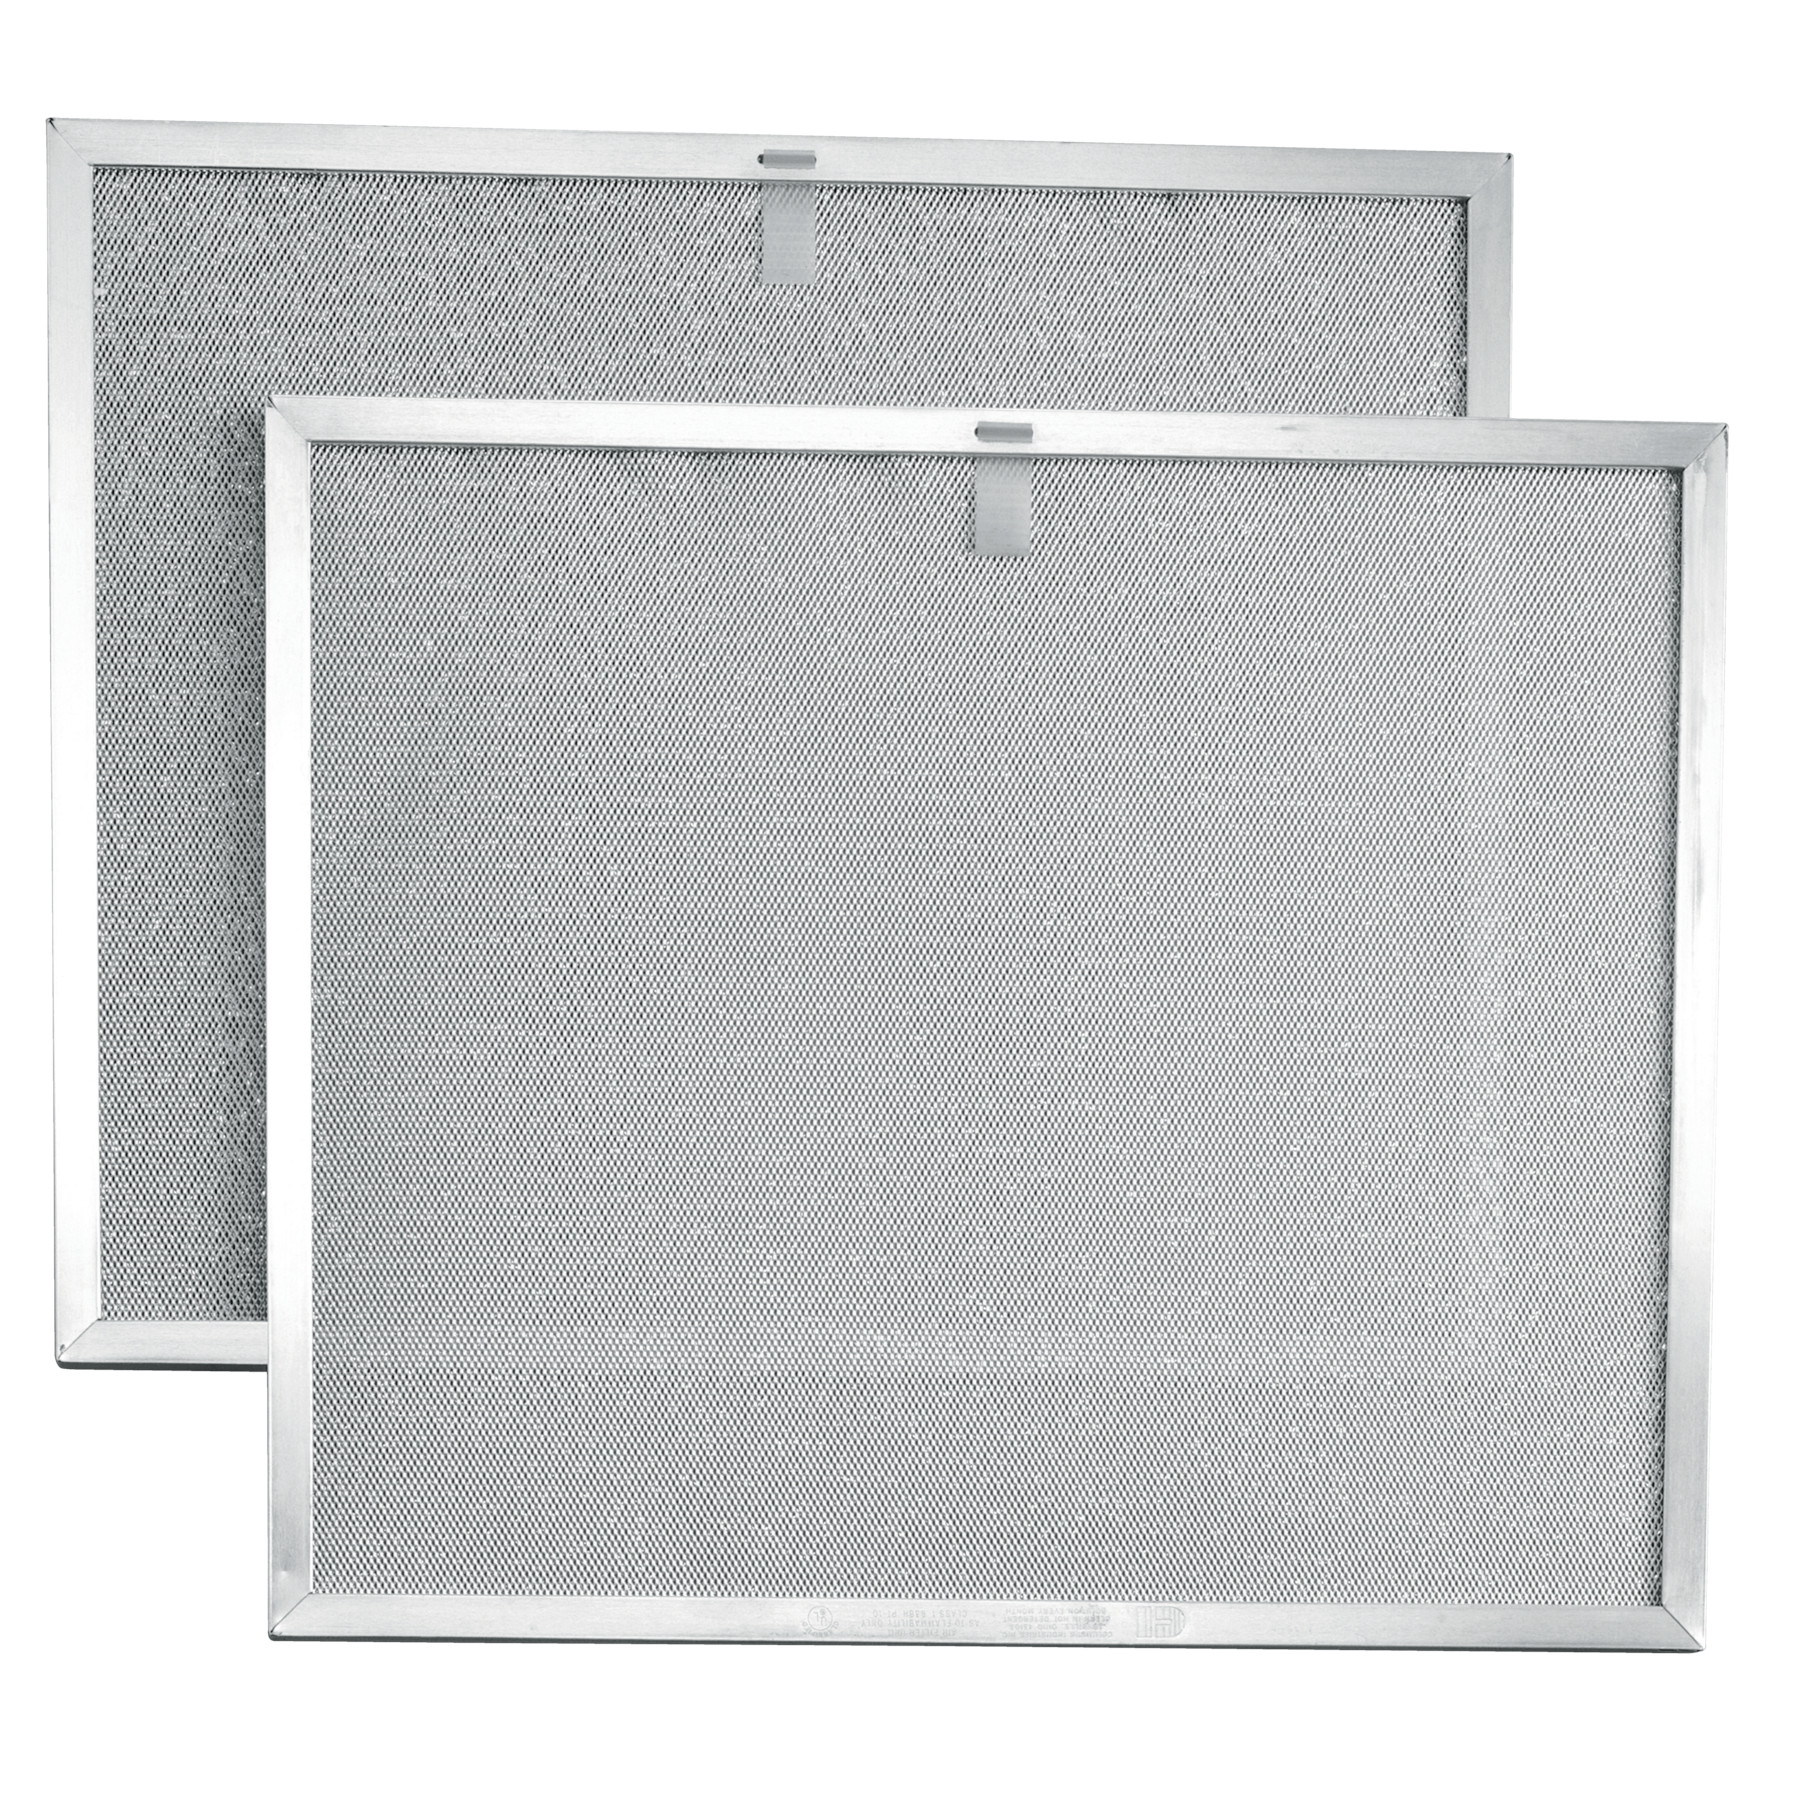 KHY 2-Pack Aluminum Mesh Range Hood Filter for Broan Nutone Model 99010299 